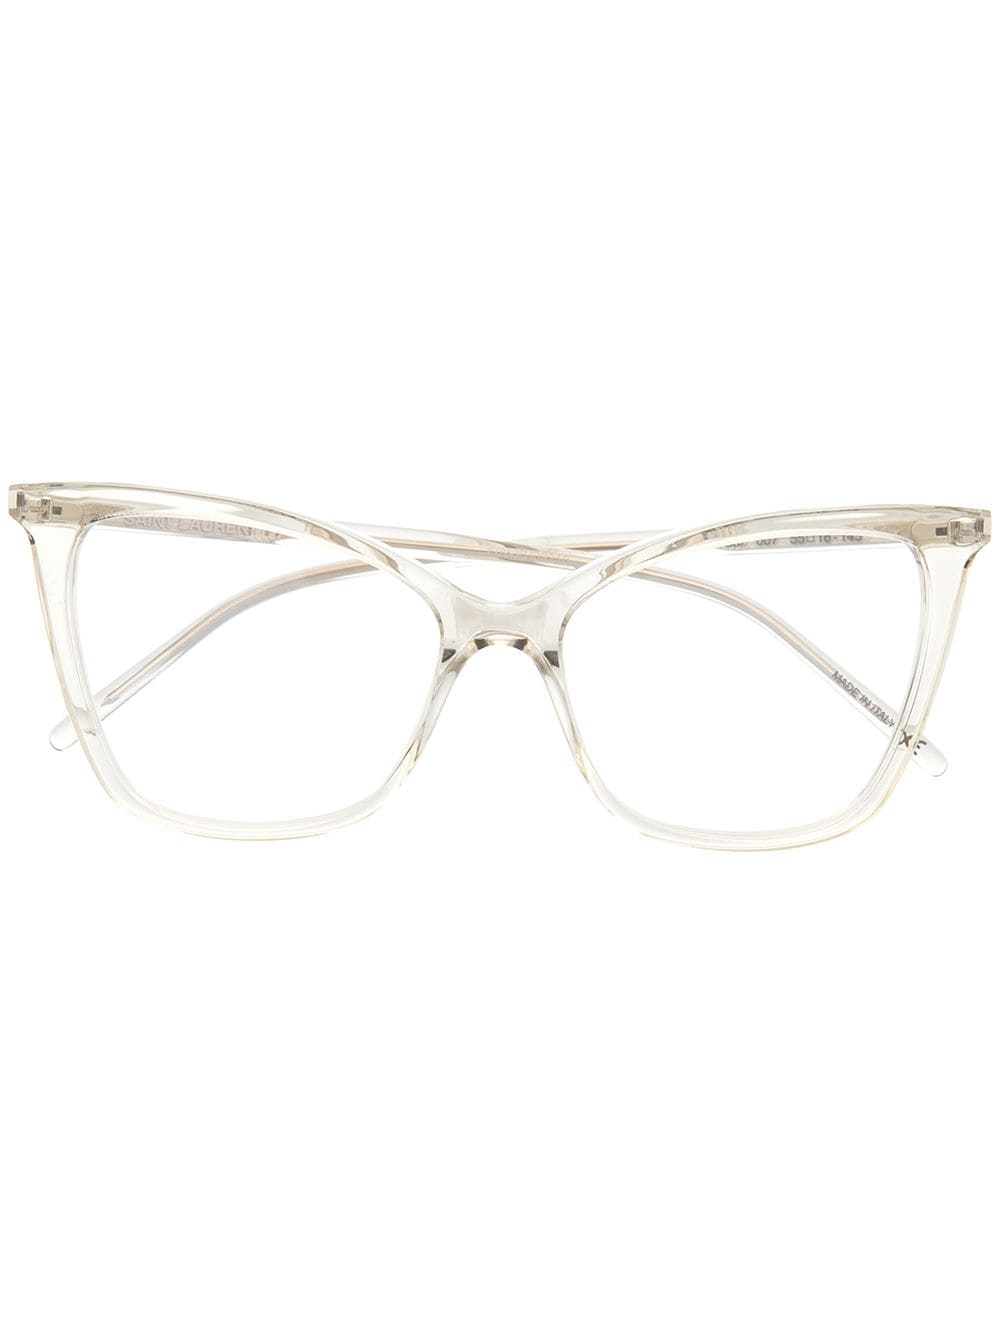 фото Saint laurent eyewear очки в оправе 'кошачий глаз'